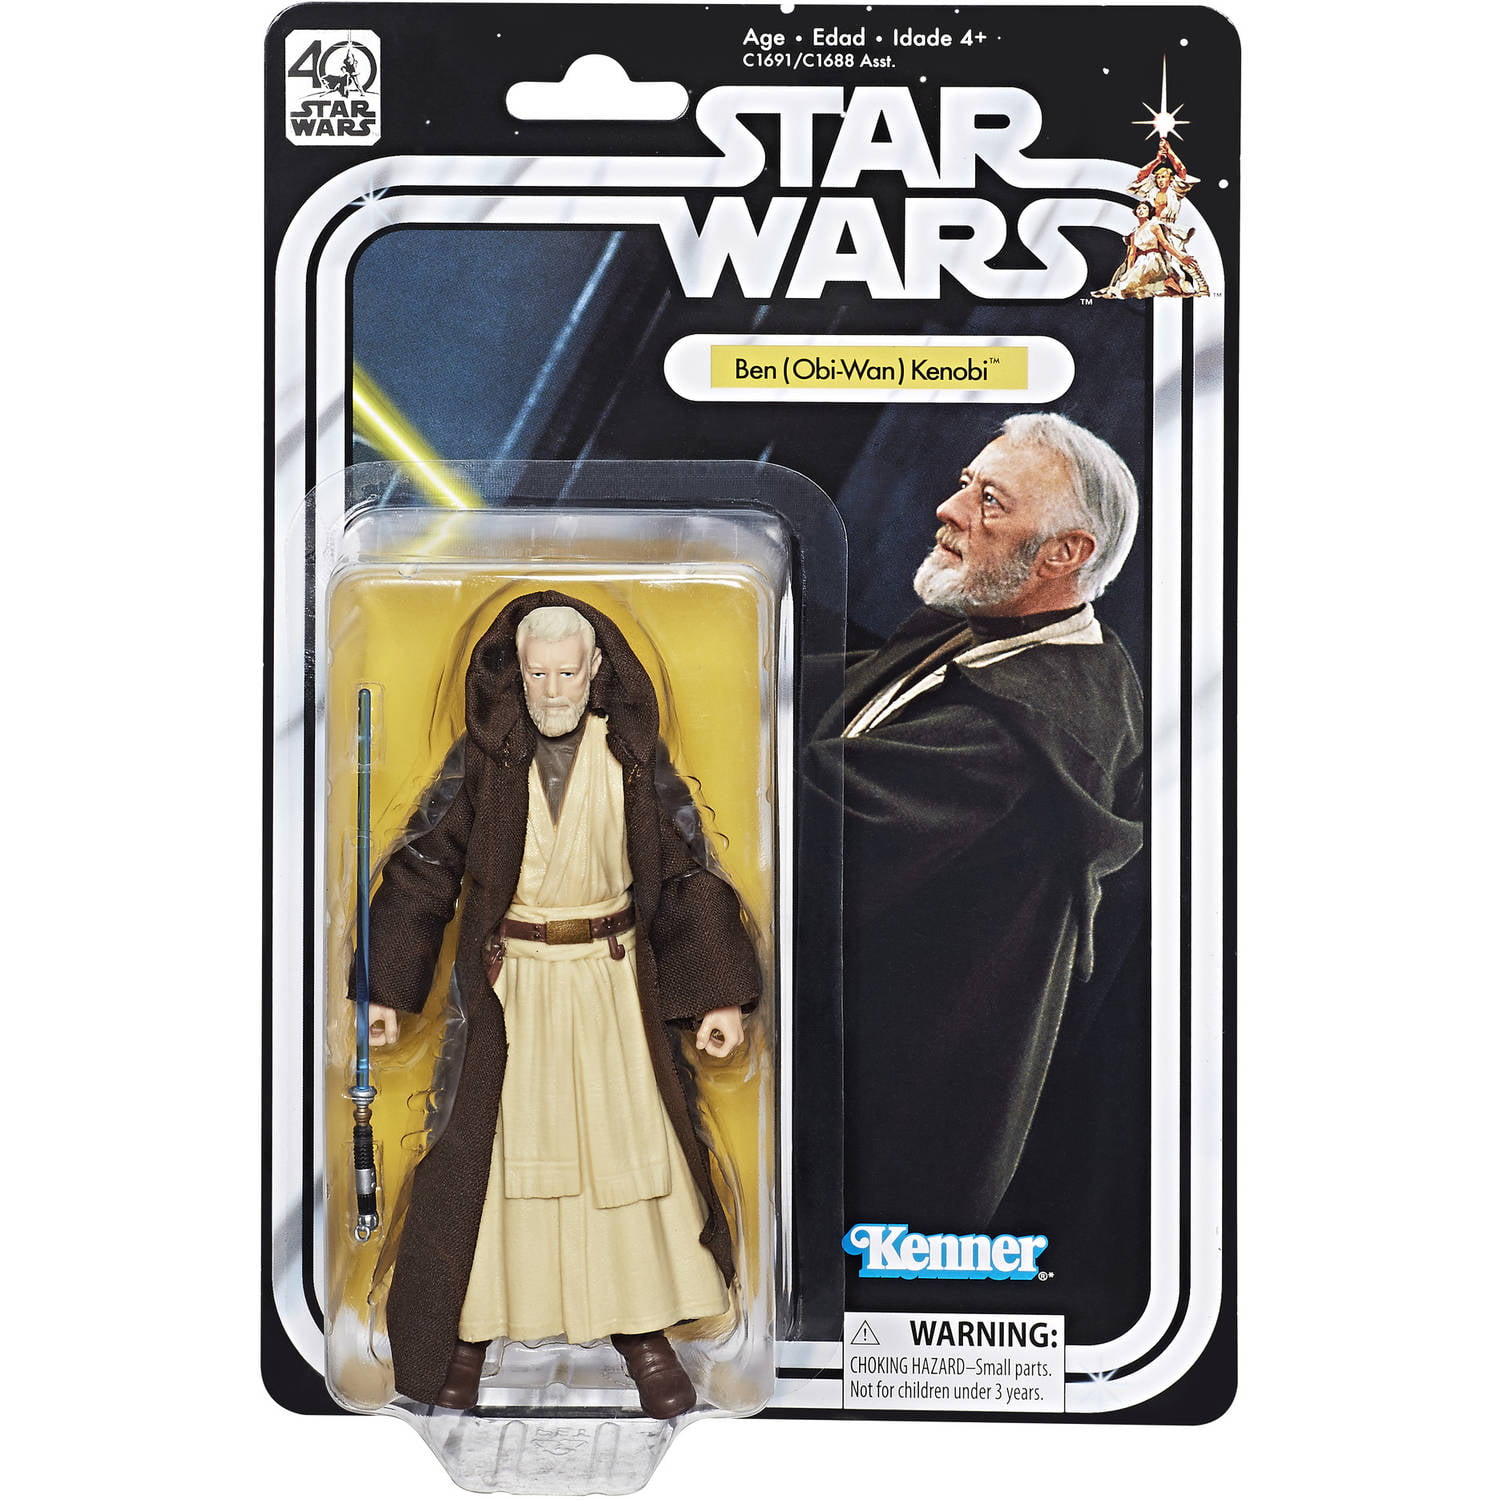 Ben Obi-Wan Kenobi 6/" The Black Series STAR WARS Hasbro MOC 40th Anniversary